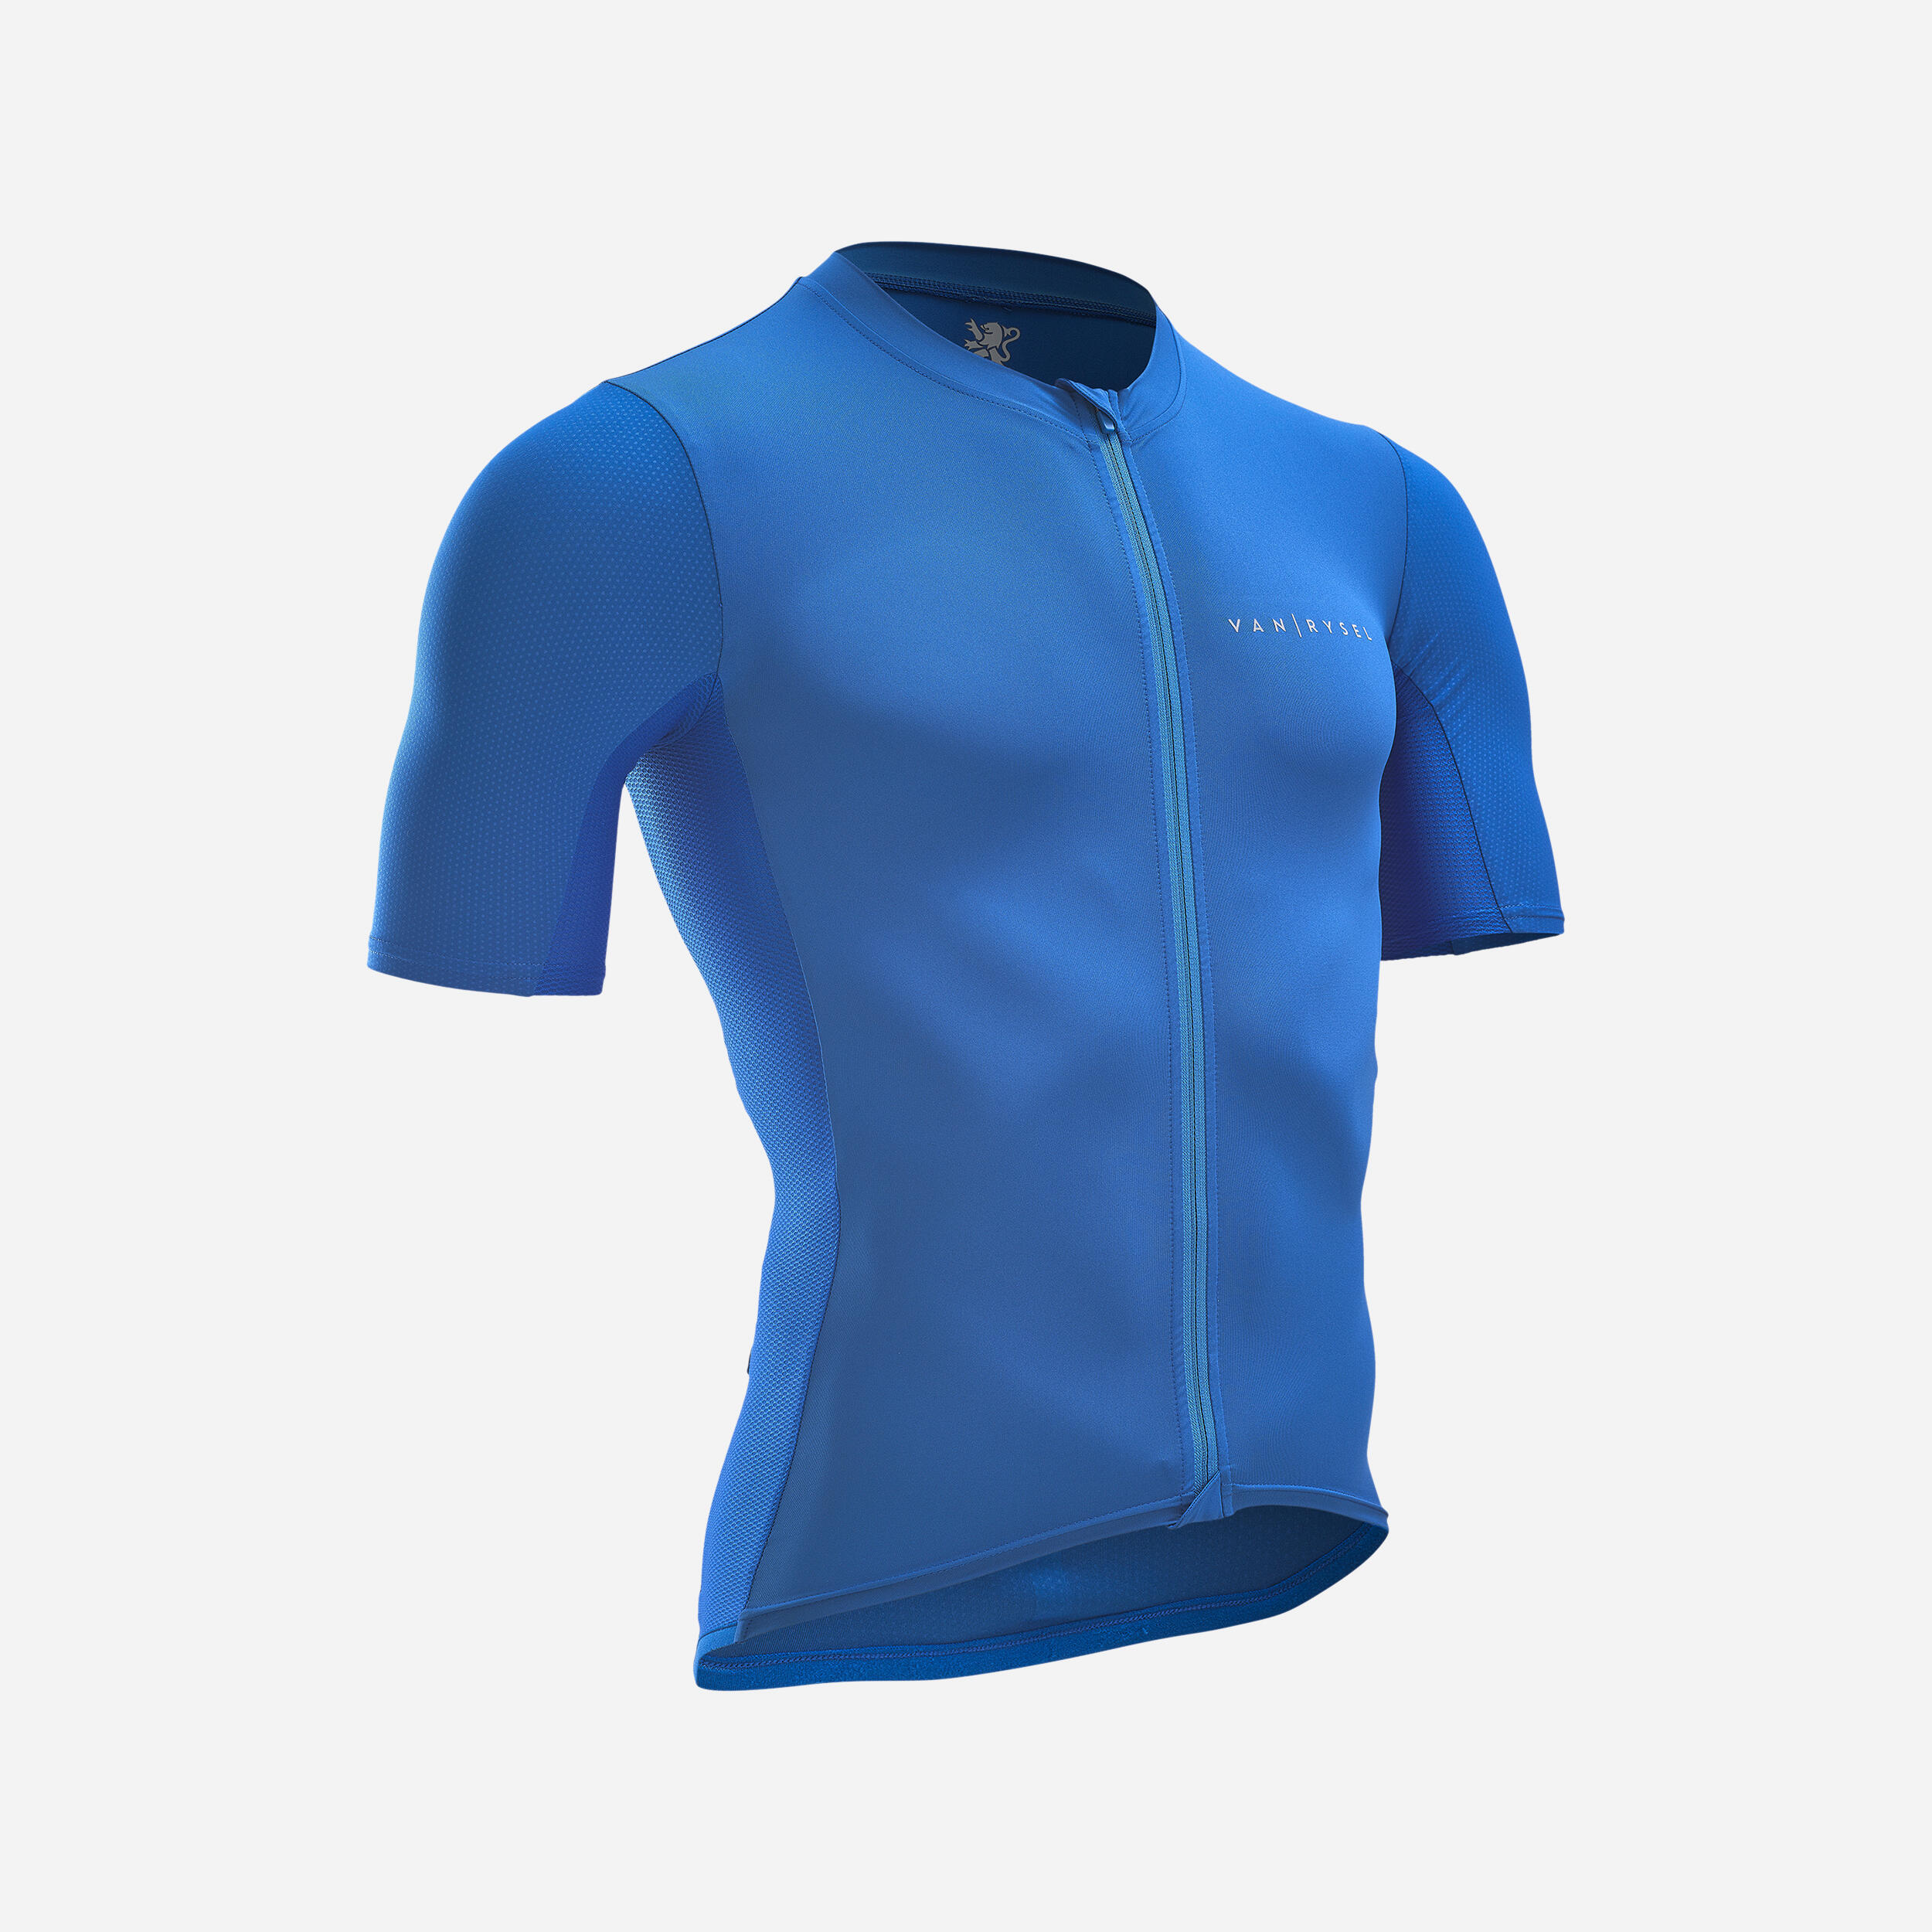 maillot-ciclismo-manga-corta-verano-hombre-van-rysel-neo-racer-azul-electrico.jpg